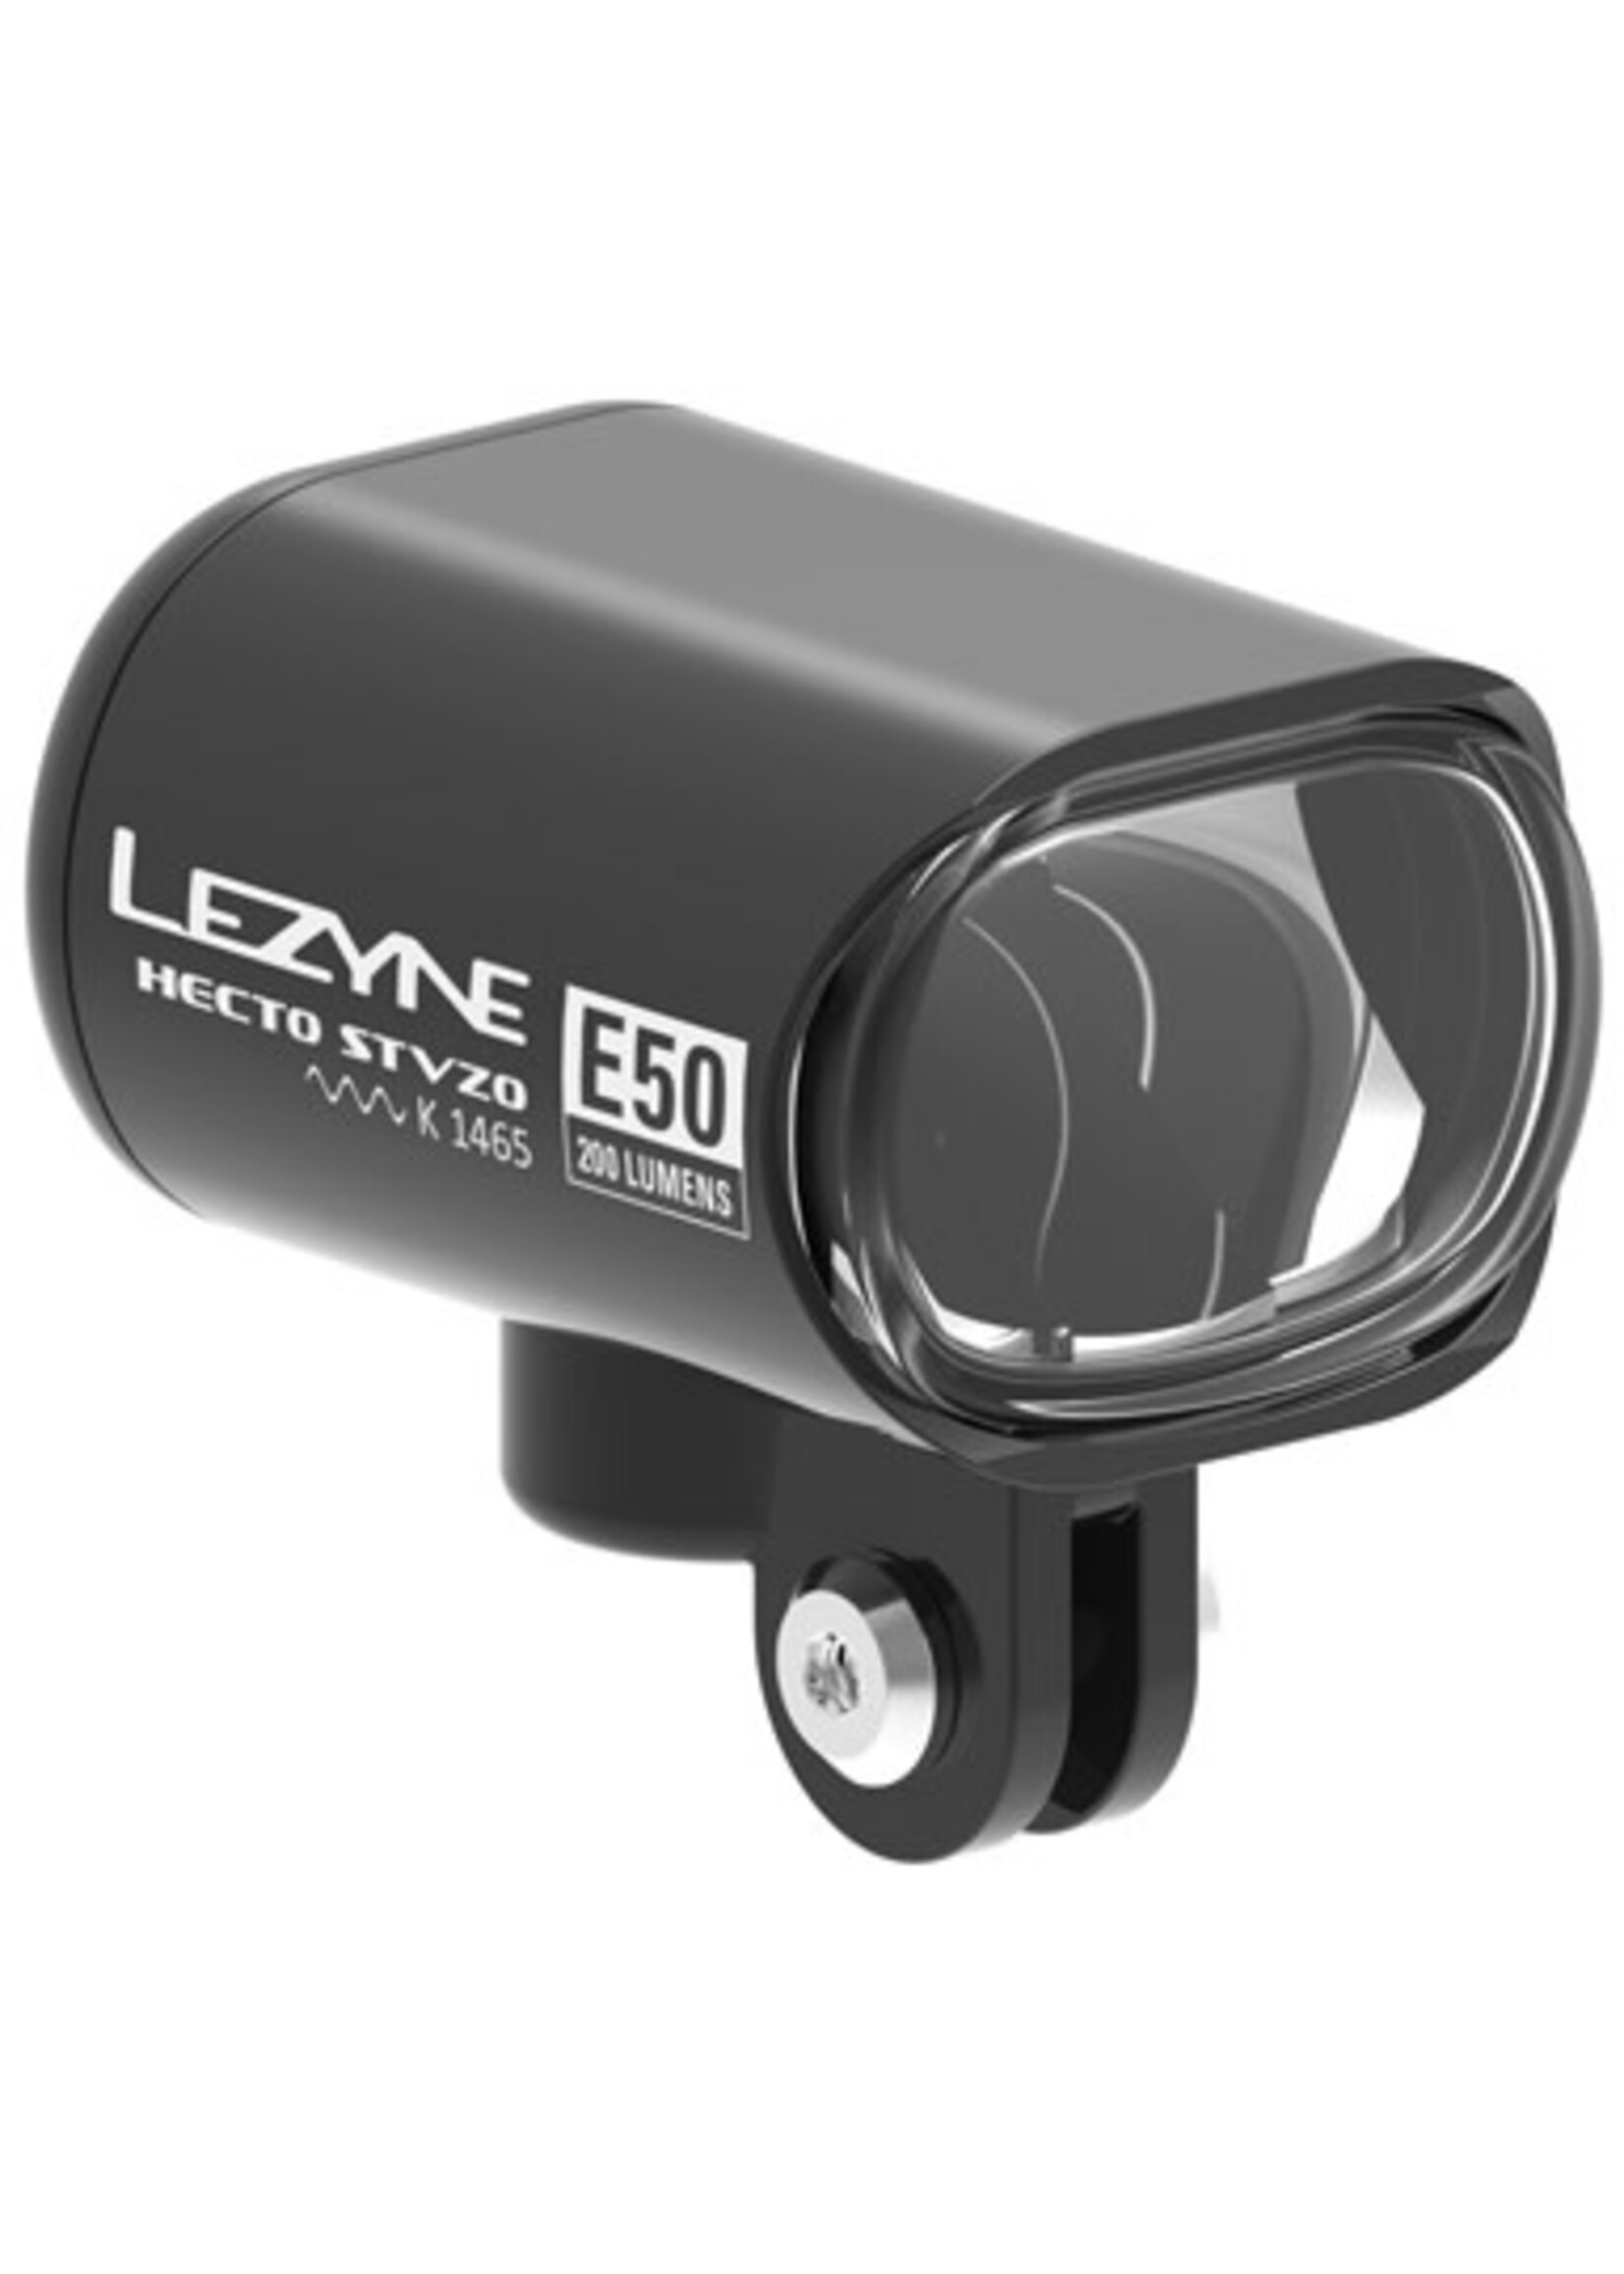 Lezyne Front light E-Bike Hecto STVZO E50 black